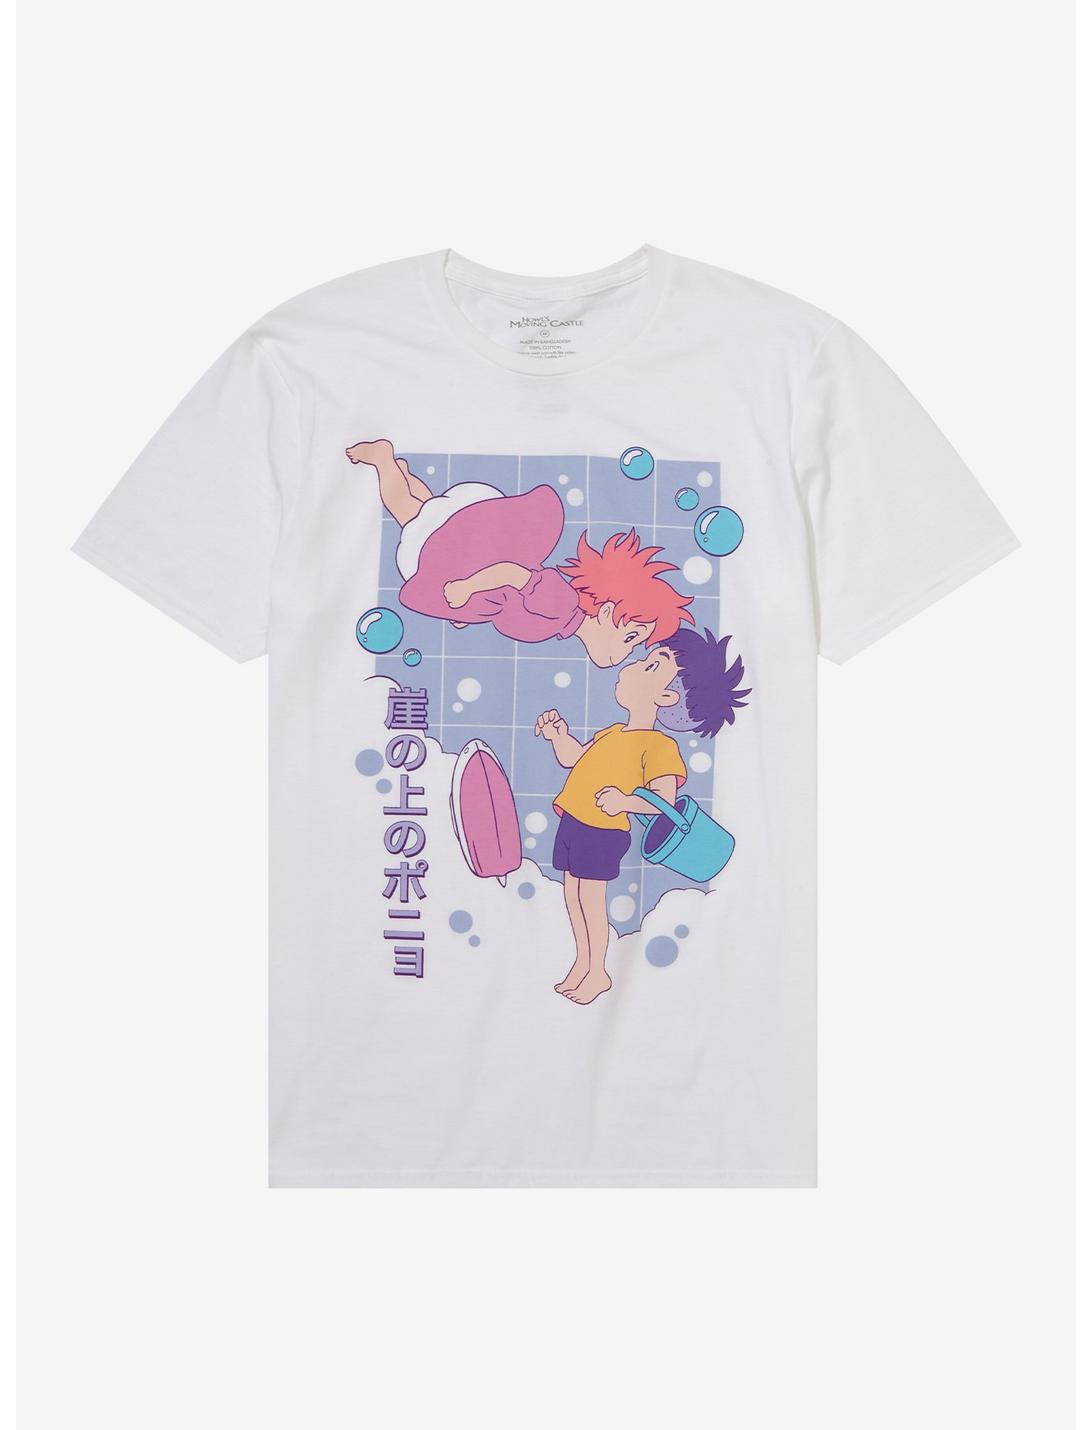 Studio Ghibli Ponyo Pastel Grid Boyfriend Fit Girls T-Shirt, MULTI, hi-res